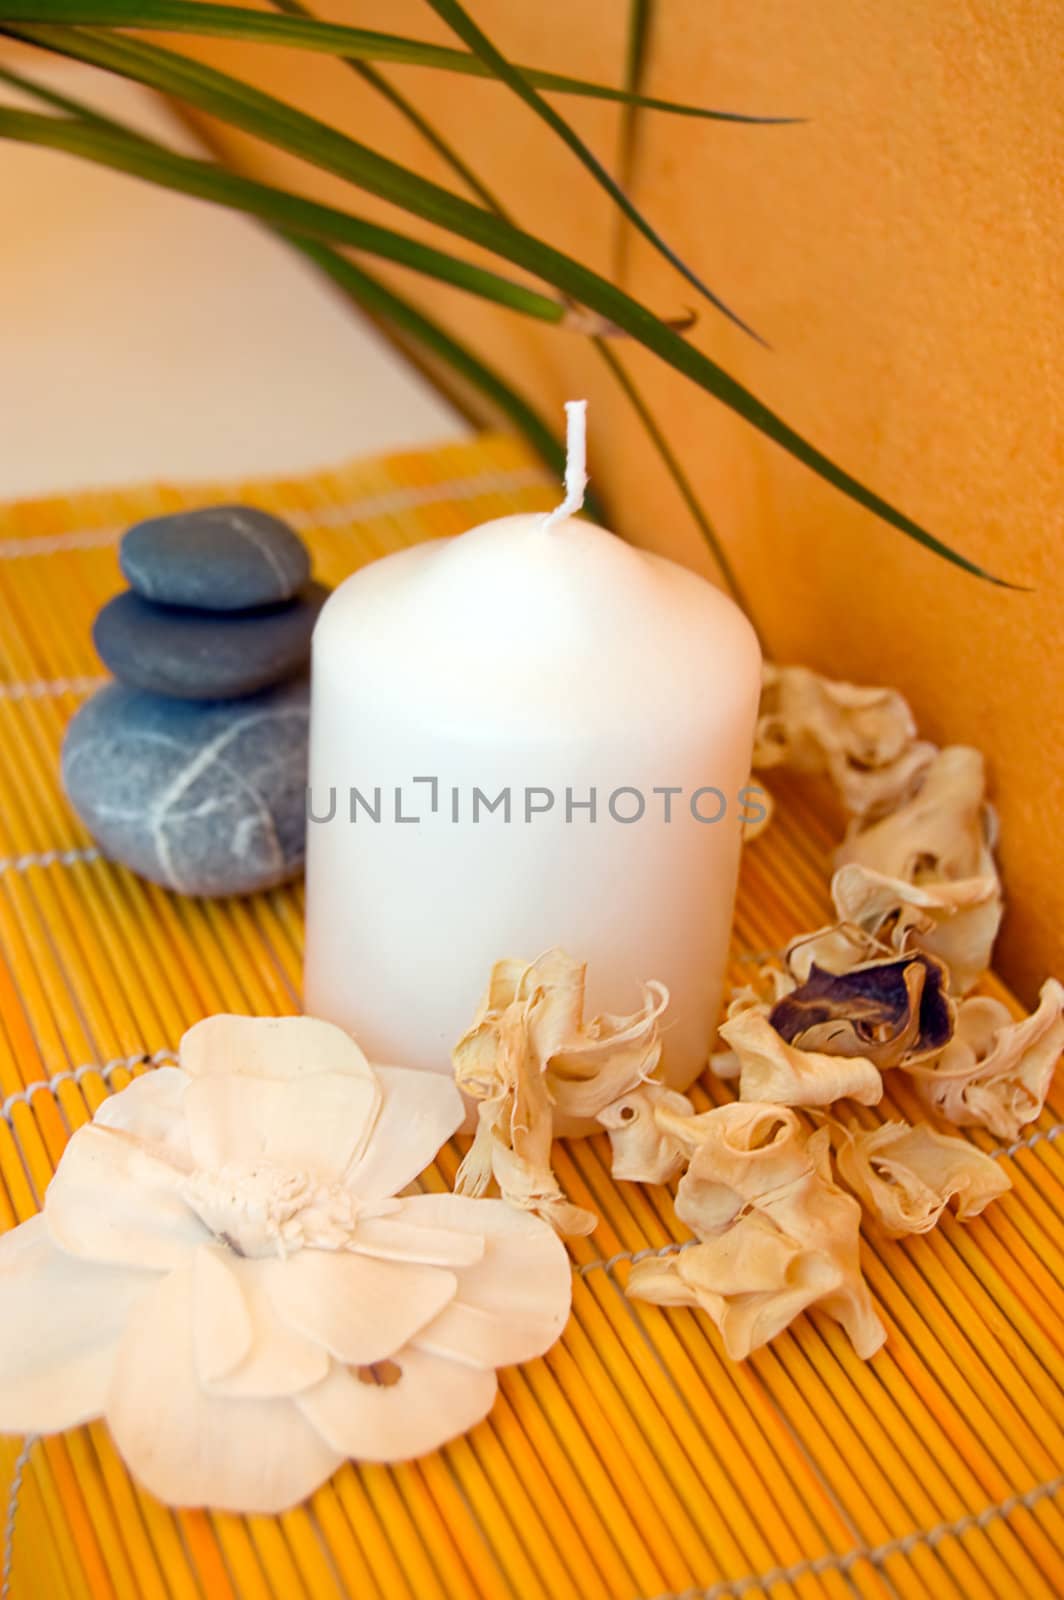 Candles, plants representing spa still life concept